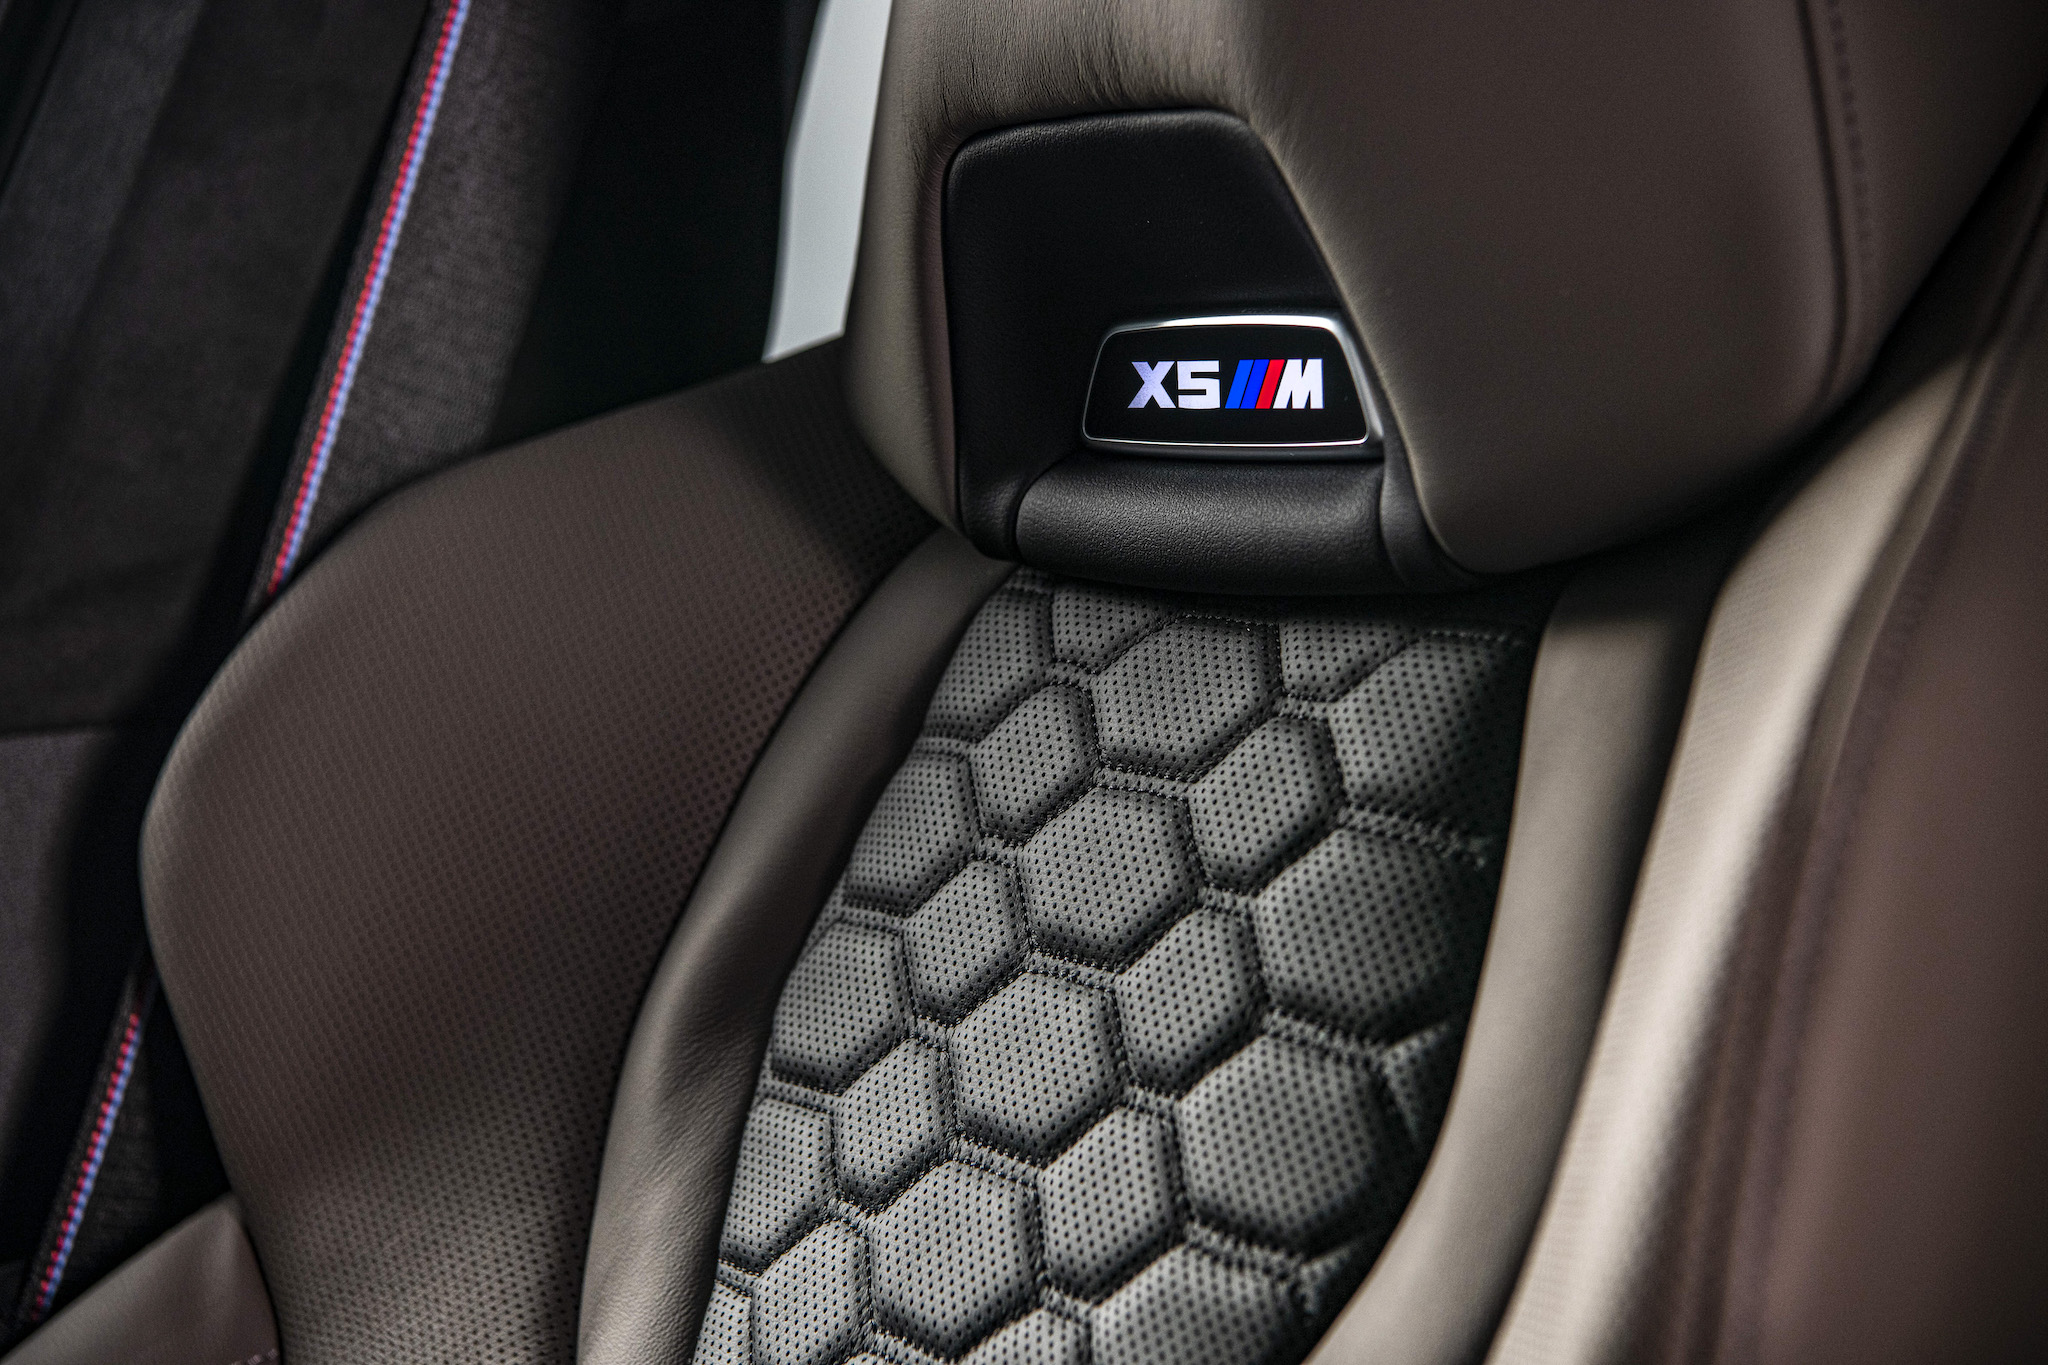 Merino 皮革 M 專屬雙前座雙色跑車座椅與發光 X5 M 銘牌。